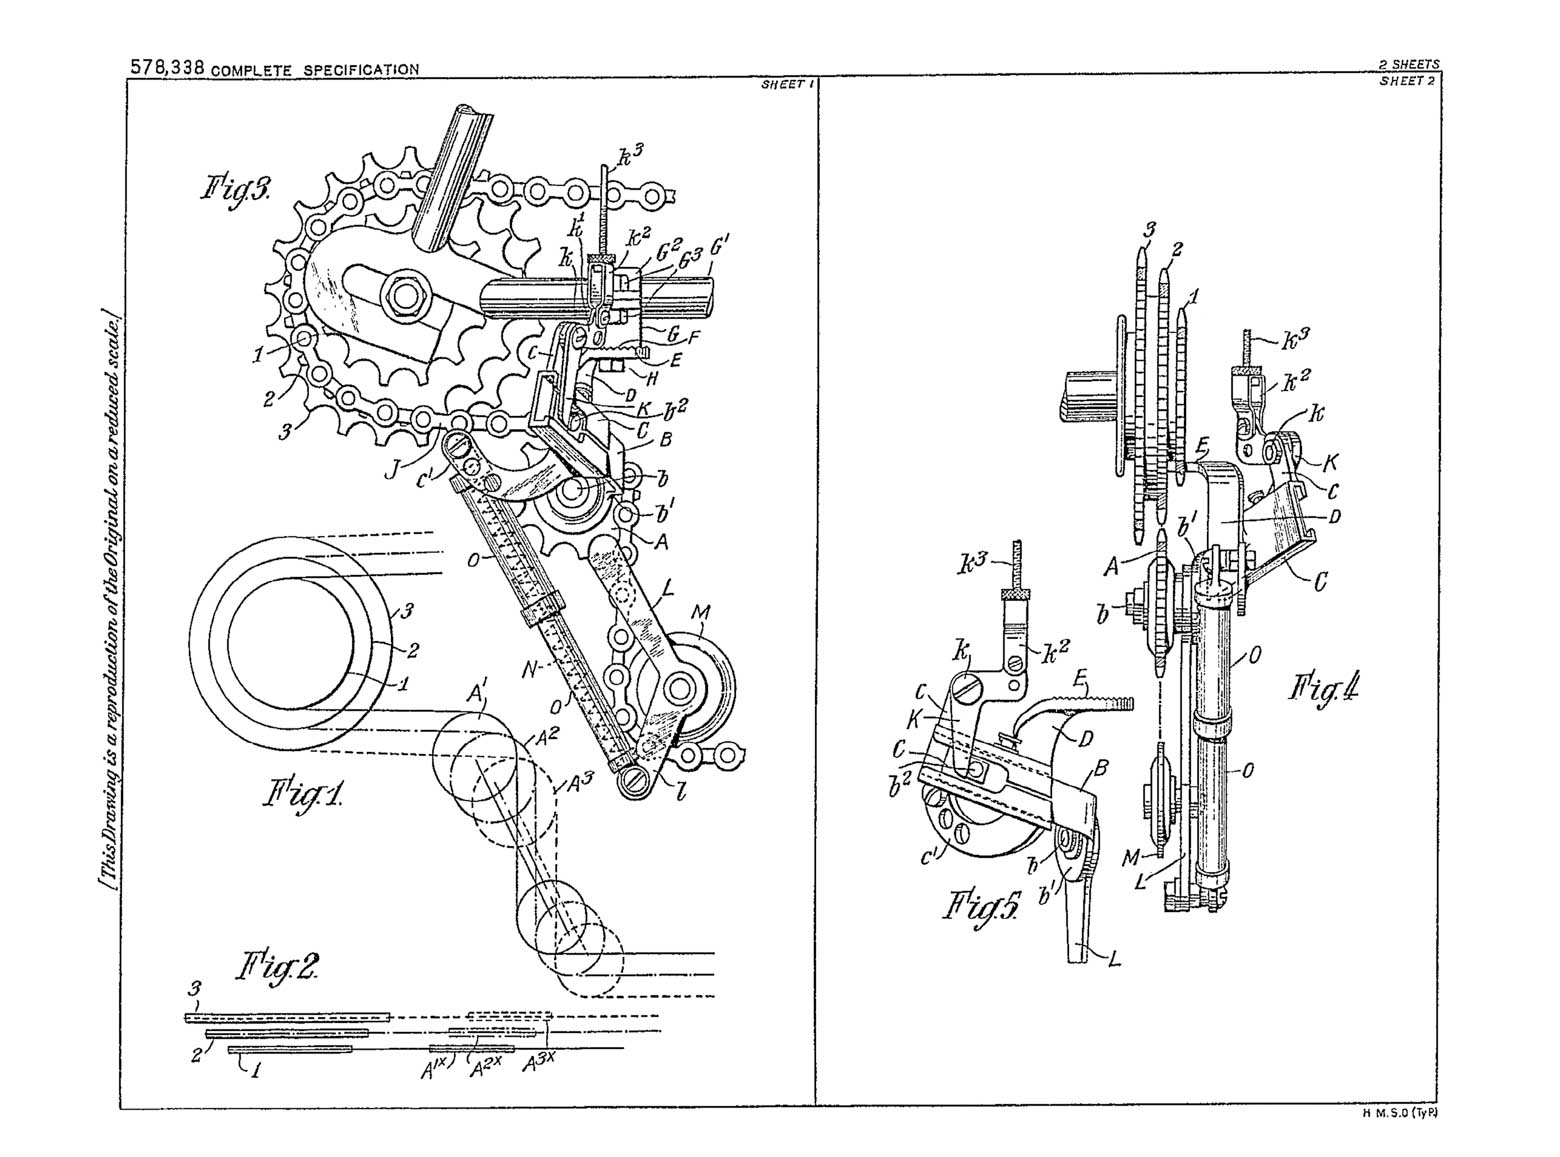 UK Patent 578,338 - Fitzpatrick scan 4 main image